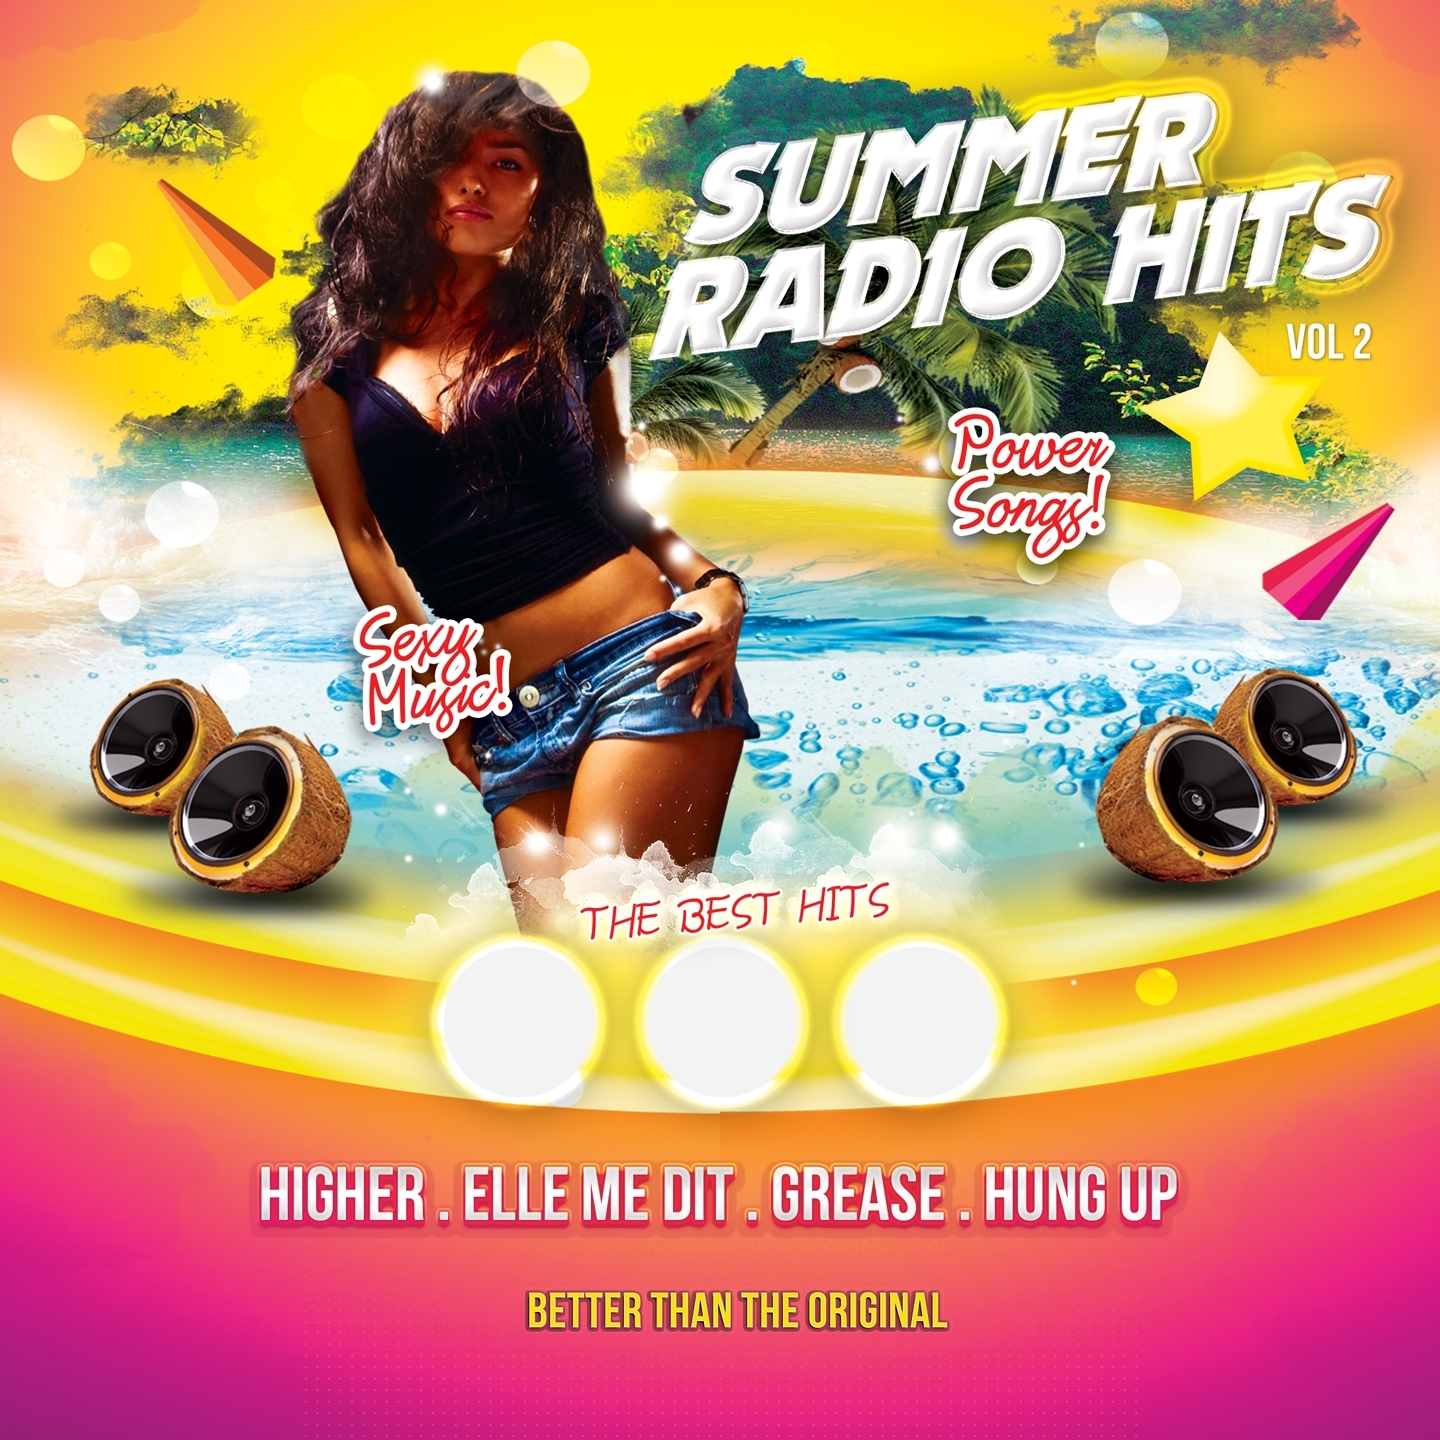 Summer Radio Hits